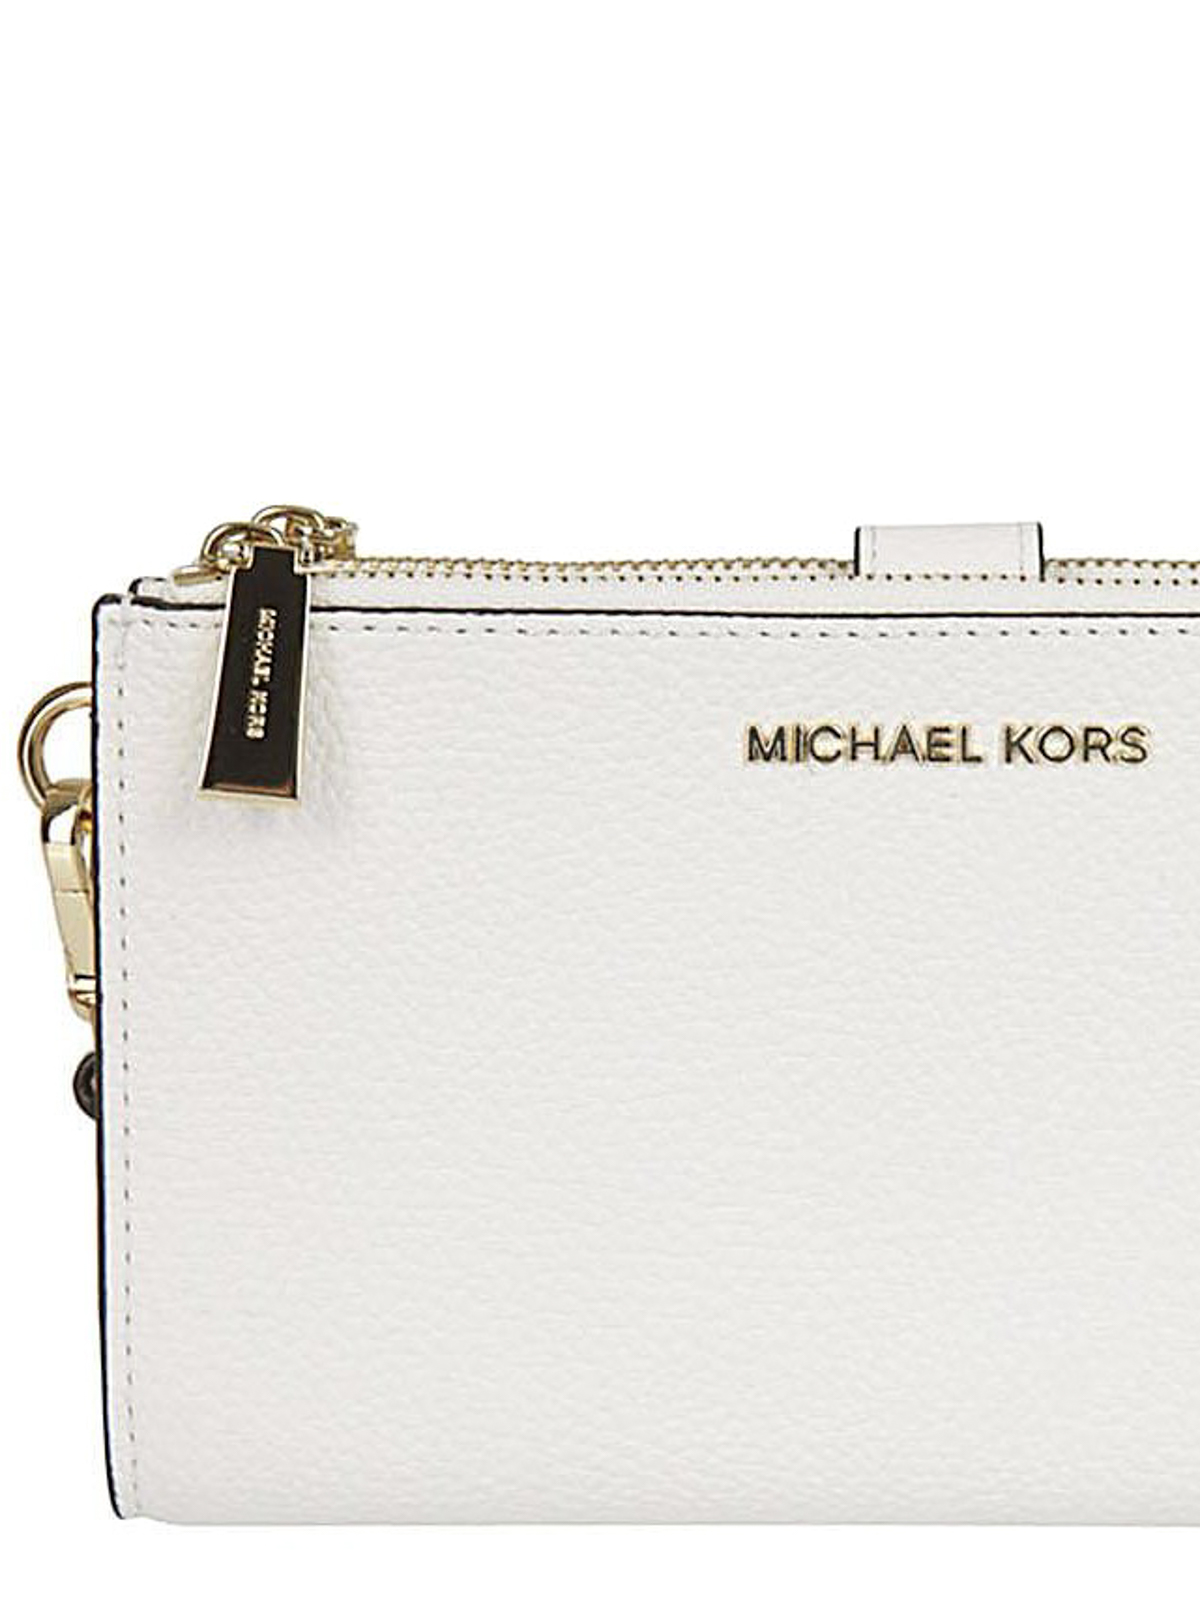 Wallets & purses Michael Kors - Adele white double zip wallet -  32T7GAFW4L085